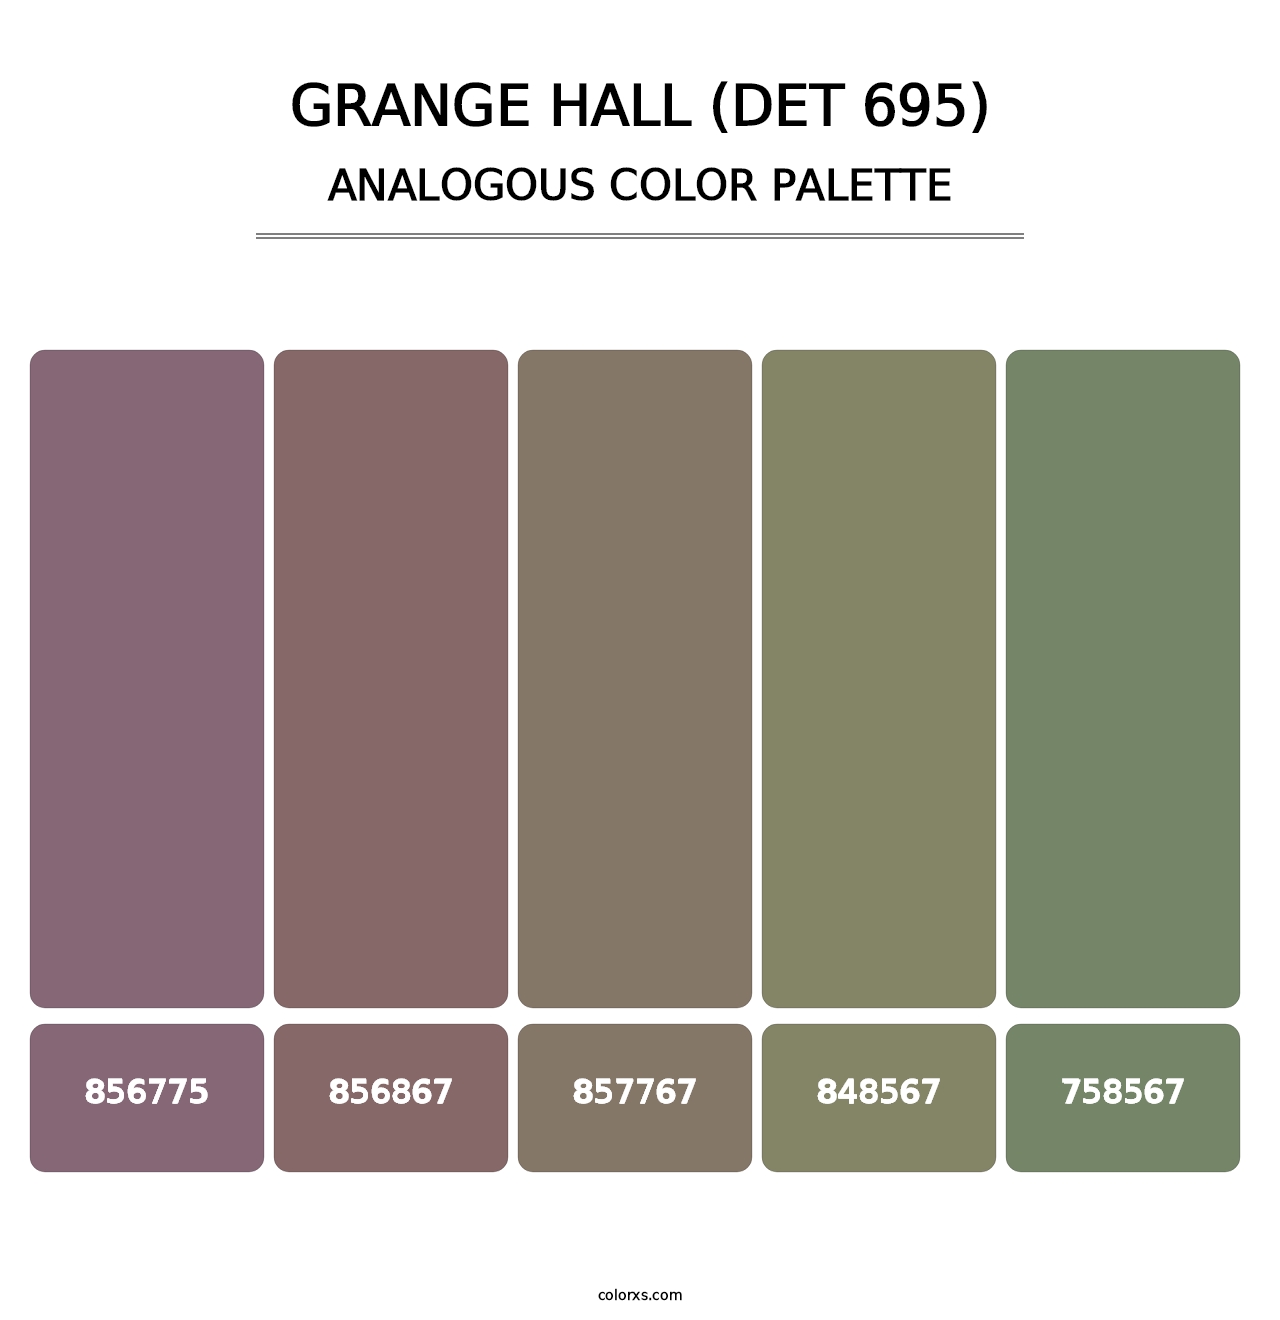 Grange Hall (DET 695) - Analogous Color Palette